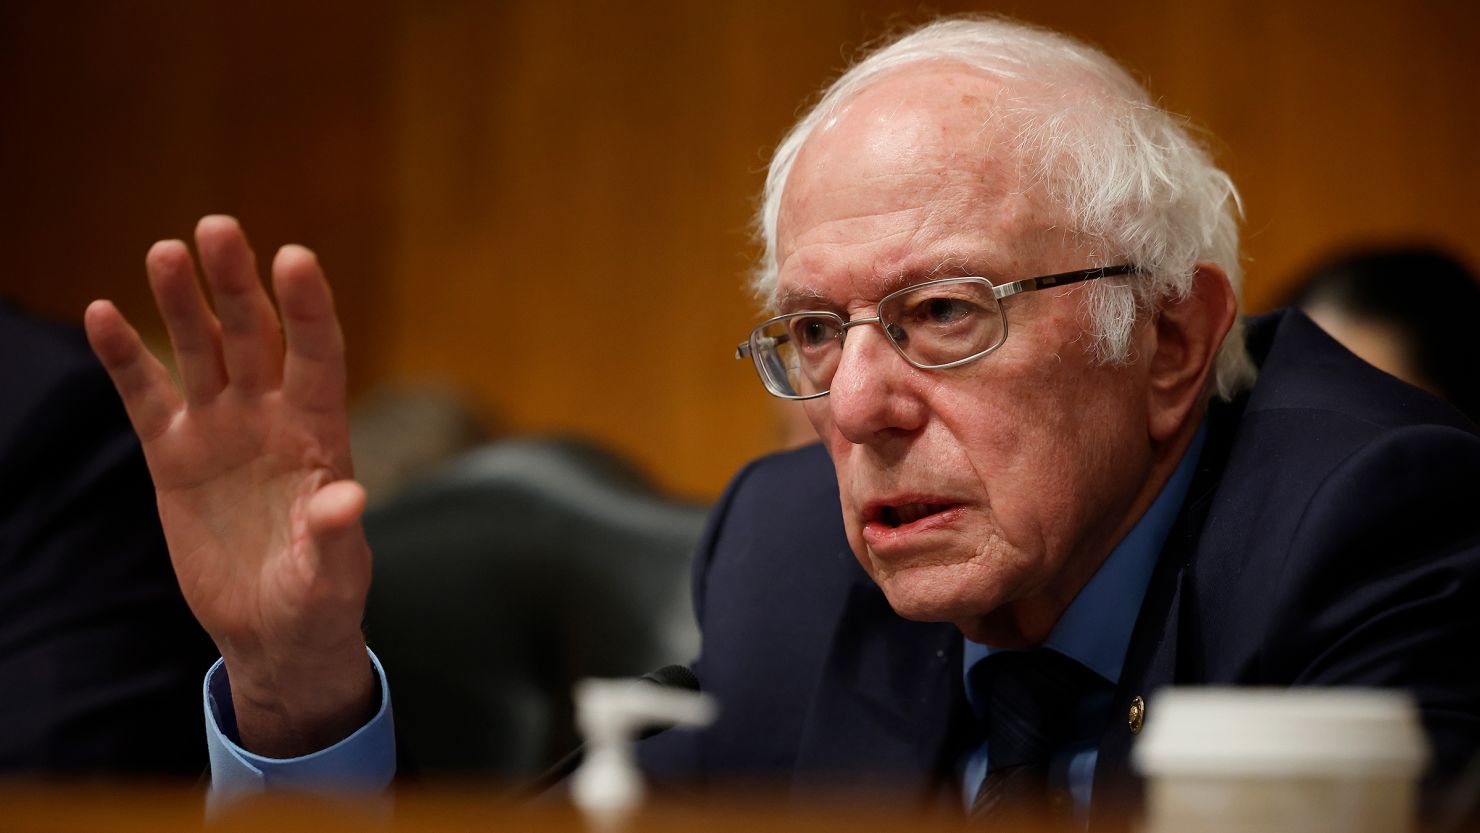 Sen. Bernie Sanders at the Dirksen Senate Office Building on Capitol Hill on March 14 in Washington, DC.